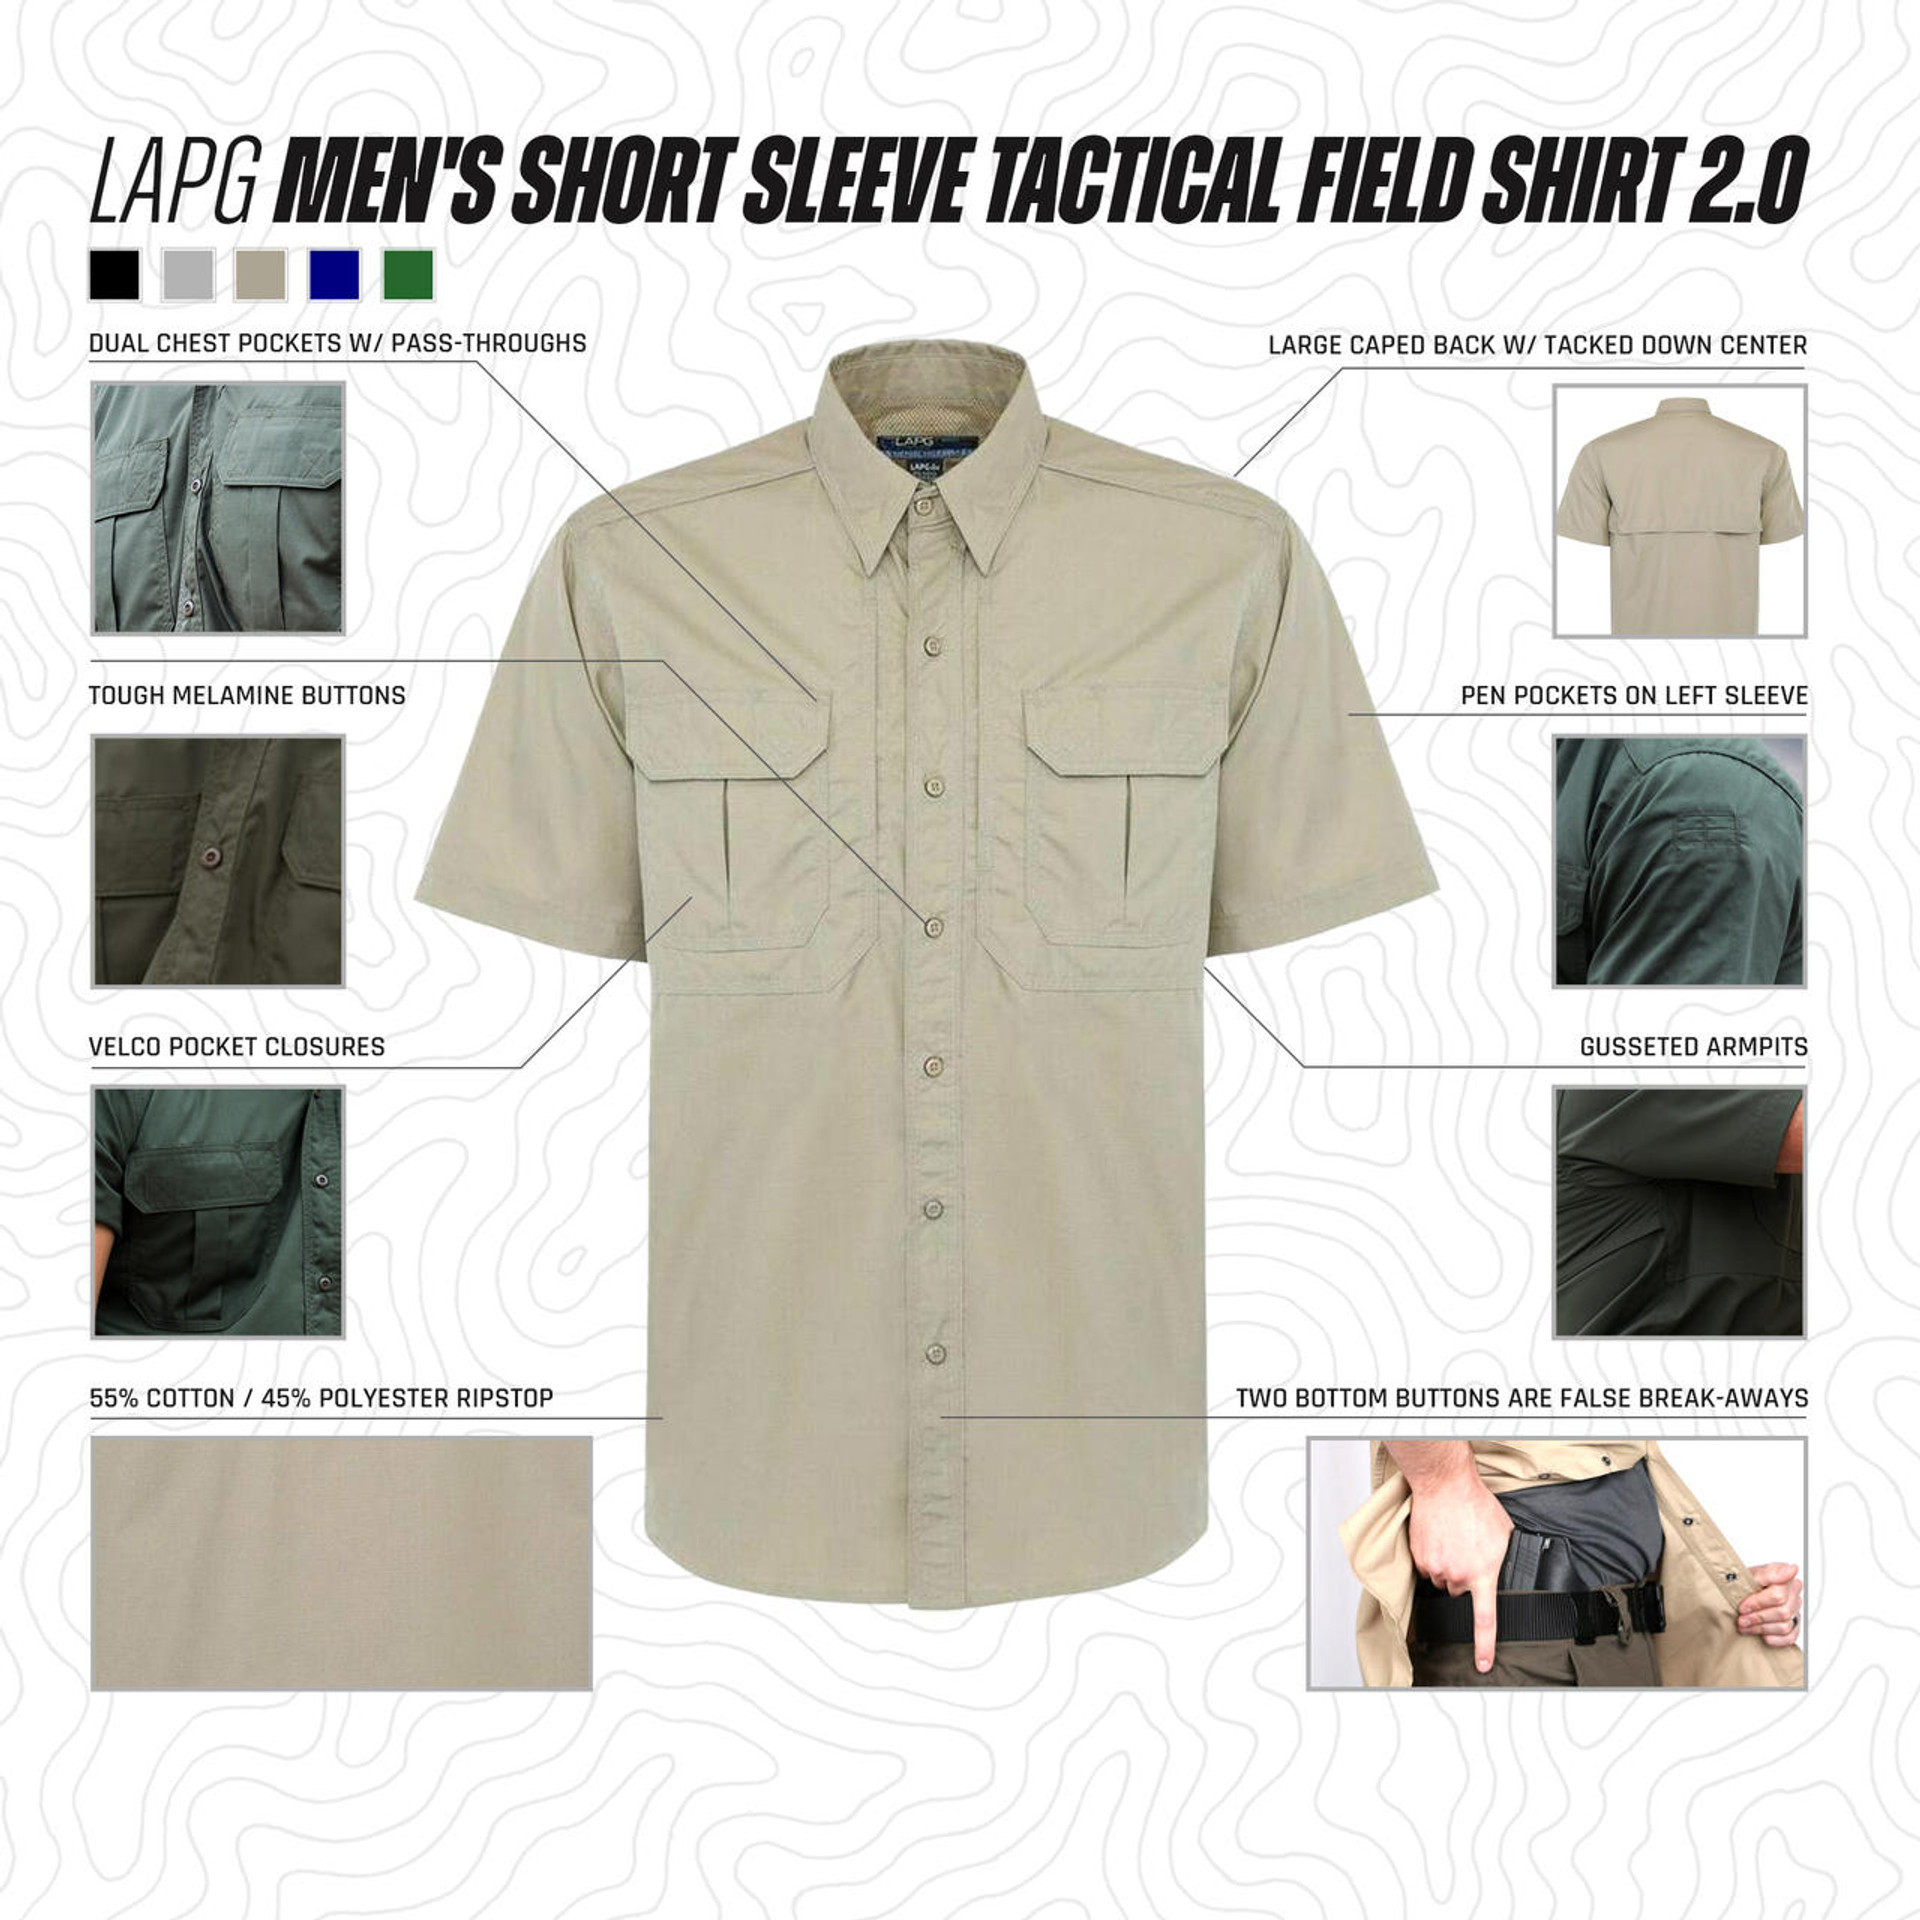 LA Police Gear Short Sleeve Tactical Field Shirt 2.0